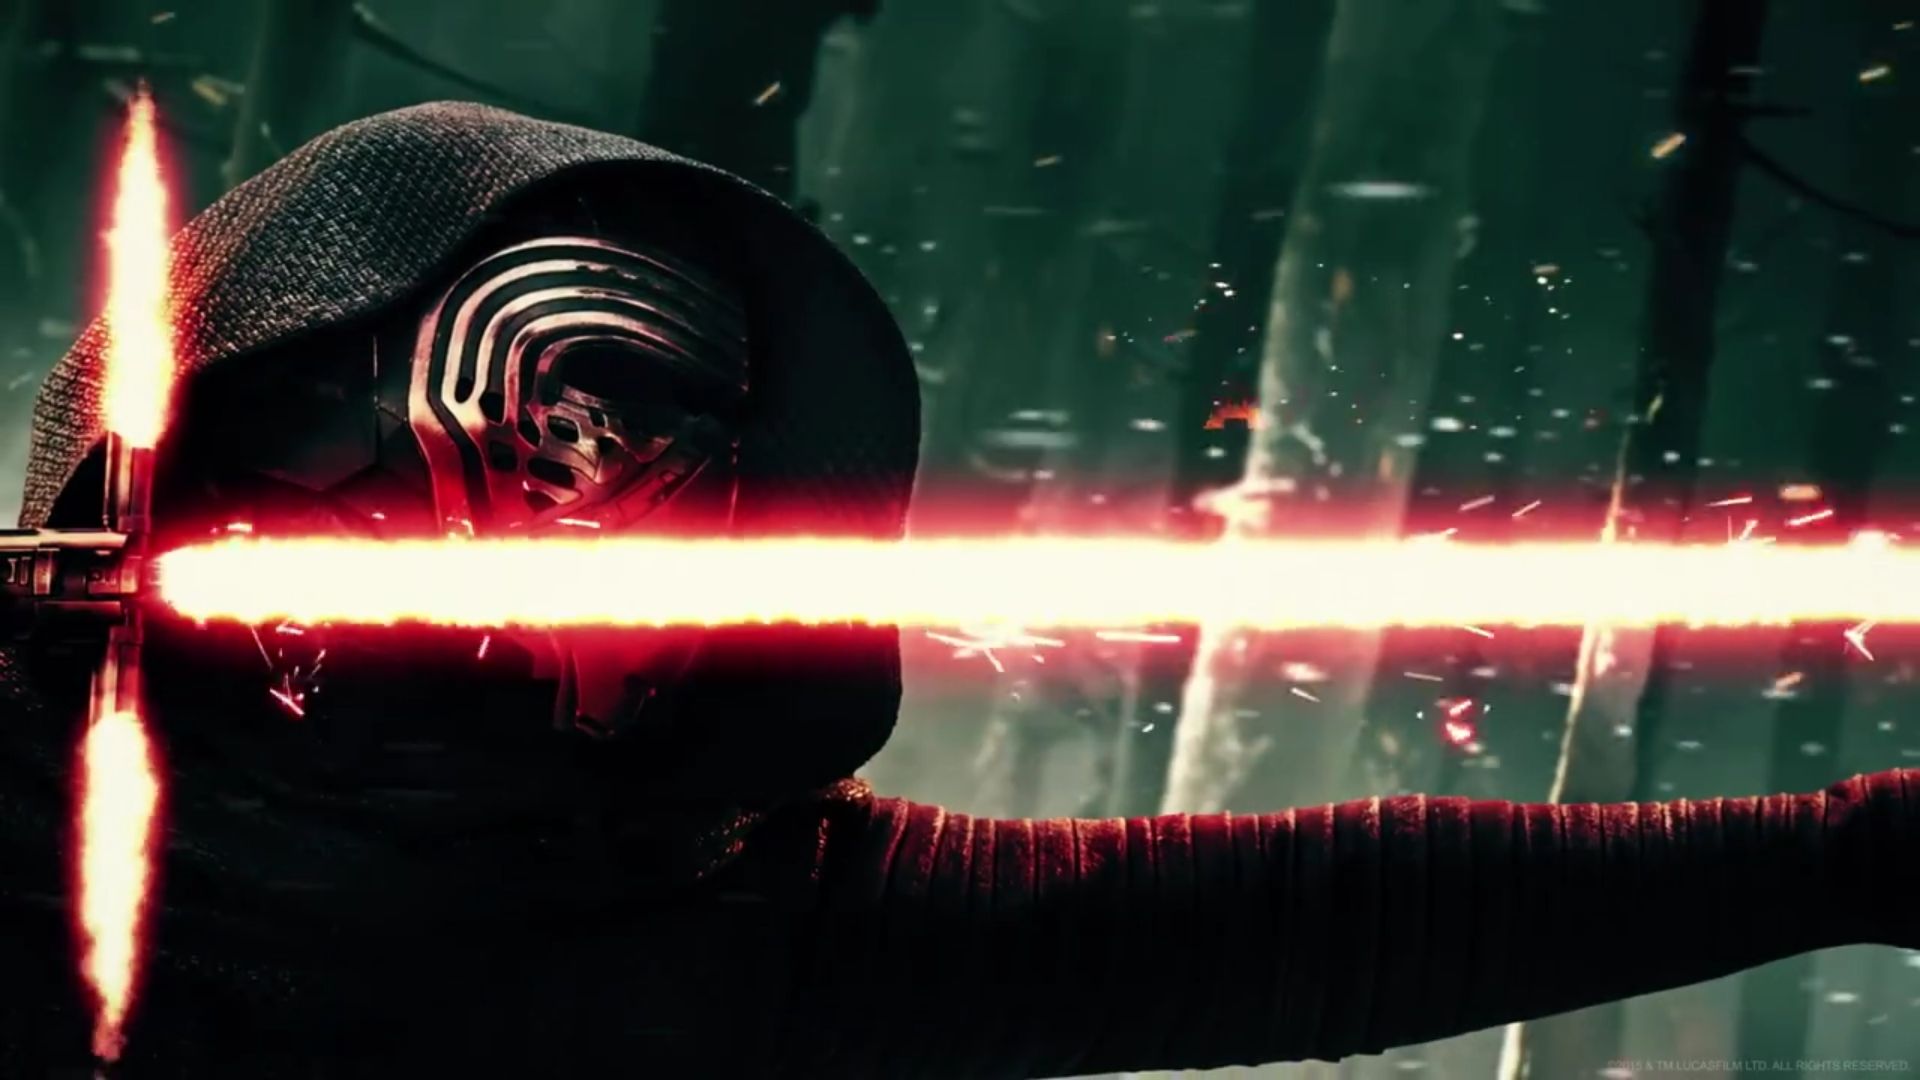  Star Wars Episode Vii: The Force Awakens Desktop Wallpaper